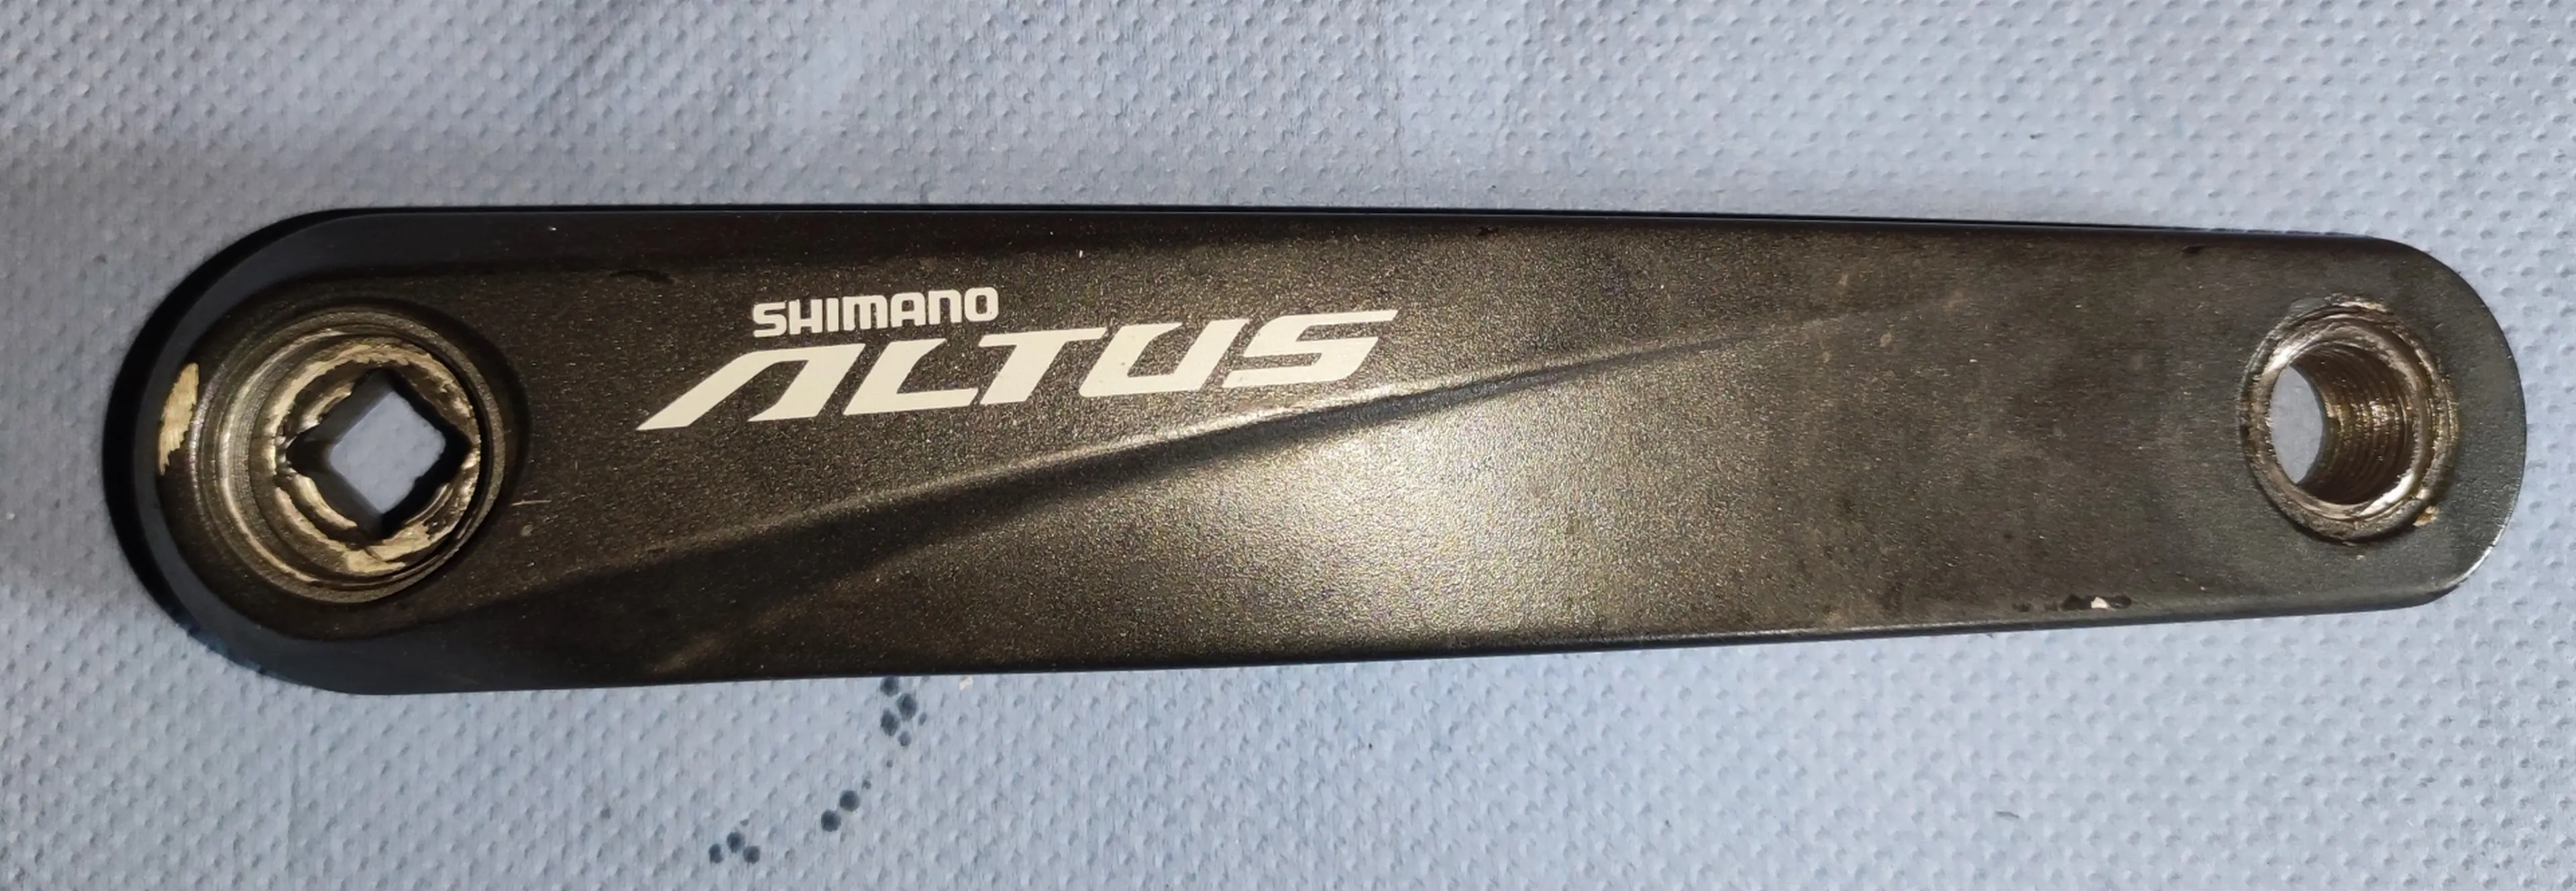 1. Brat Shimano Altus 170mm